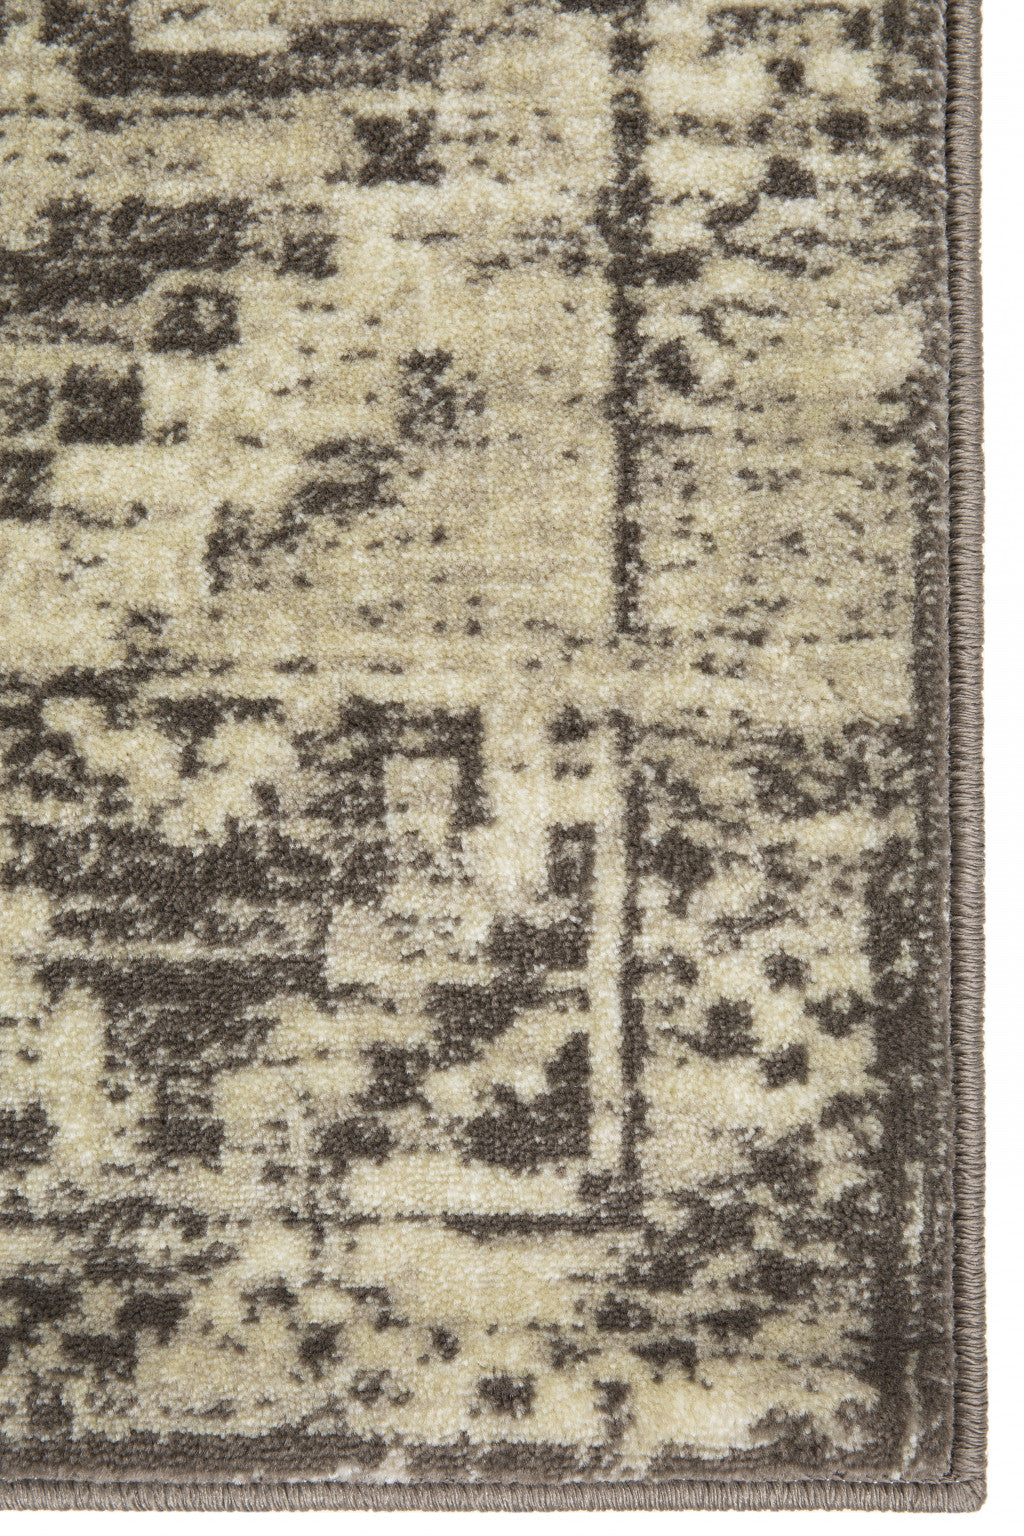 8' x 11' Gray Abstract Area Rug